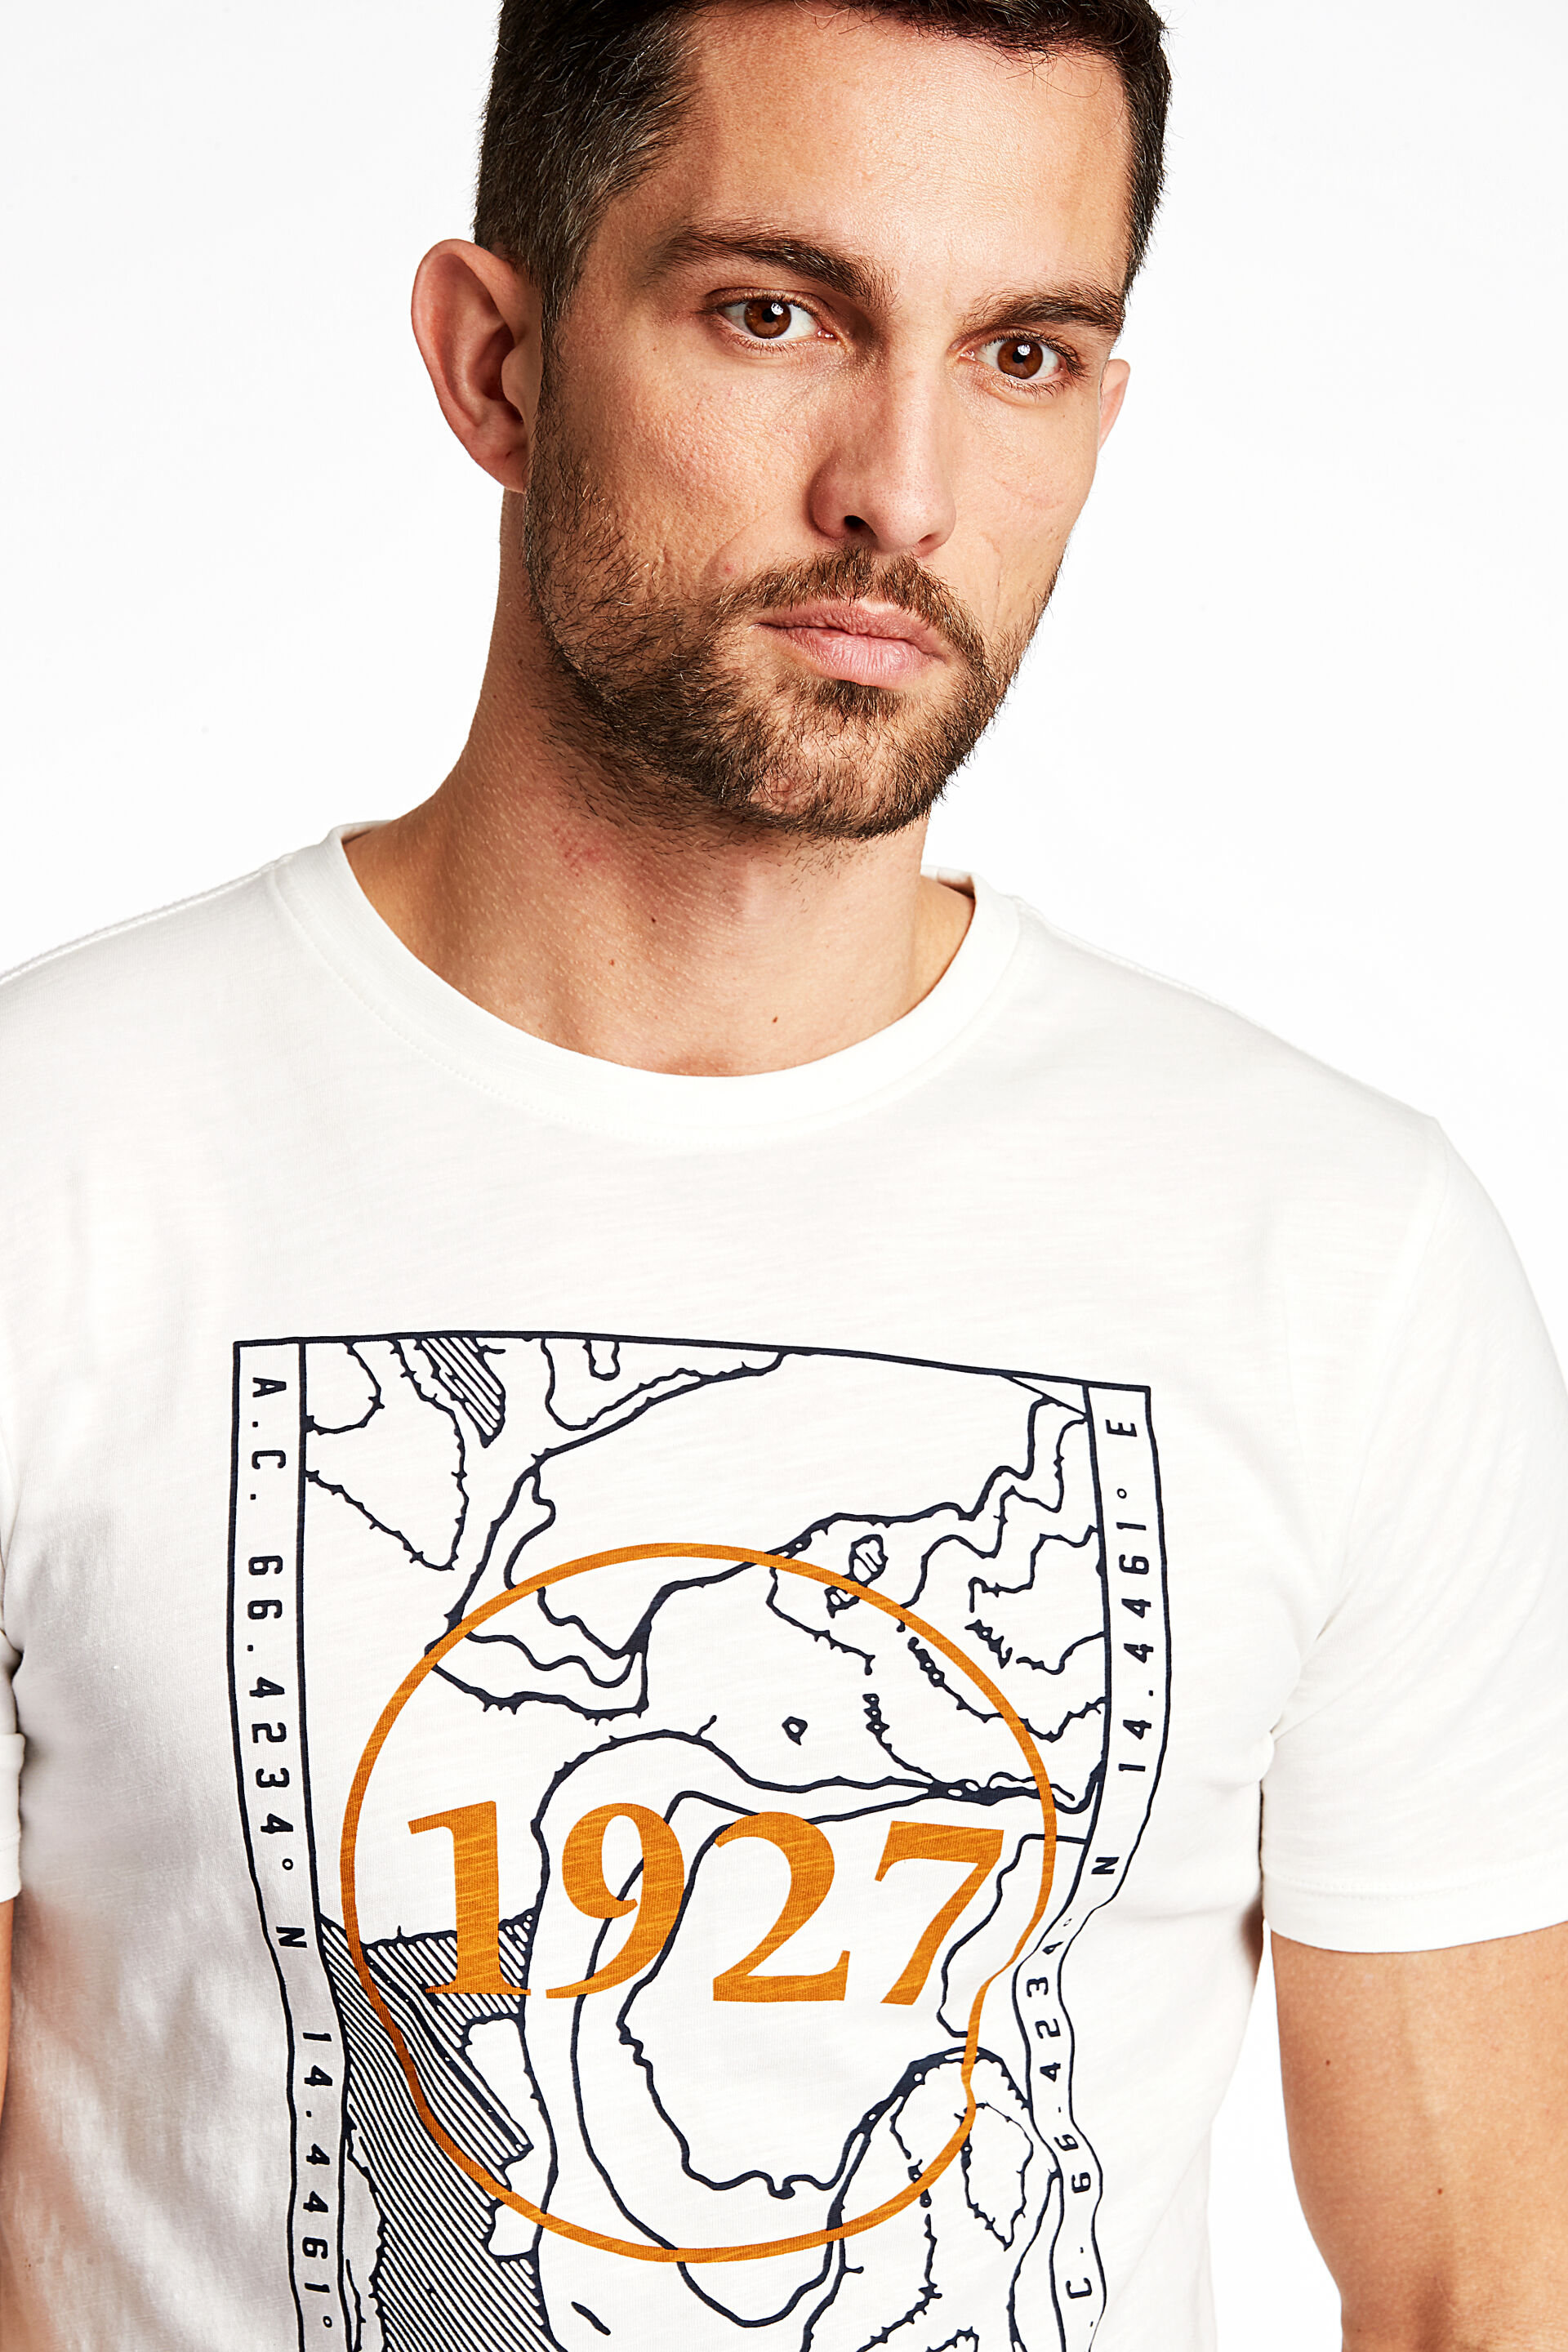 Lindbergh  T-shirt 30-420123